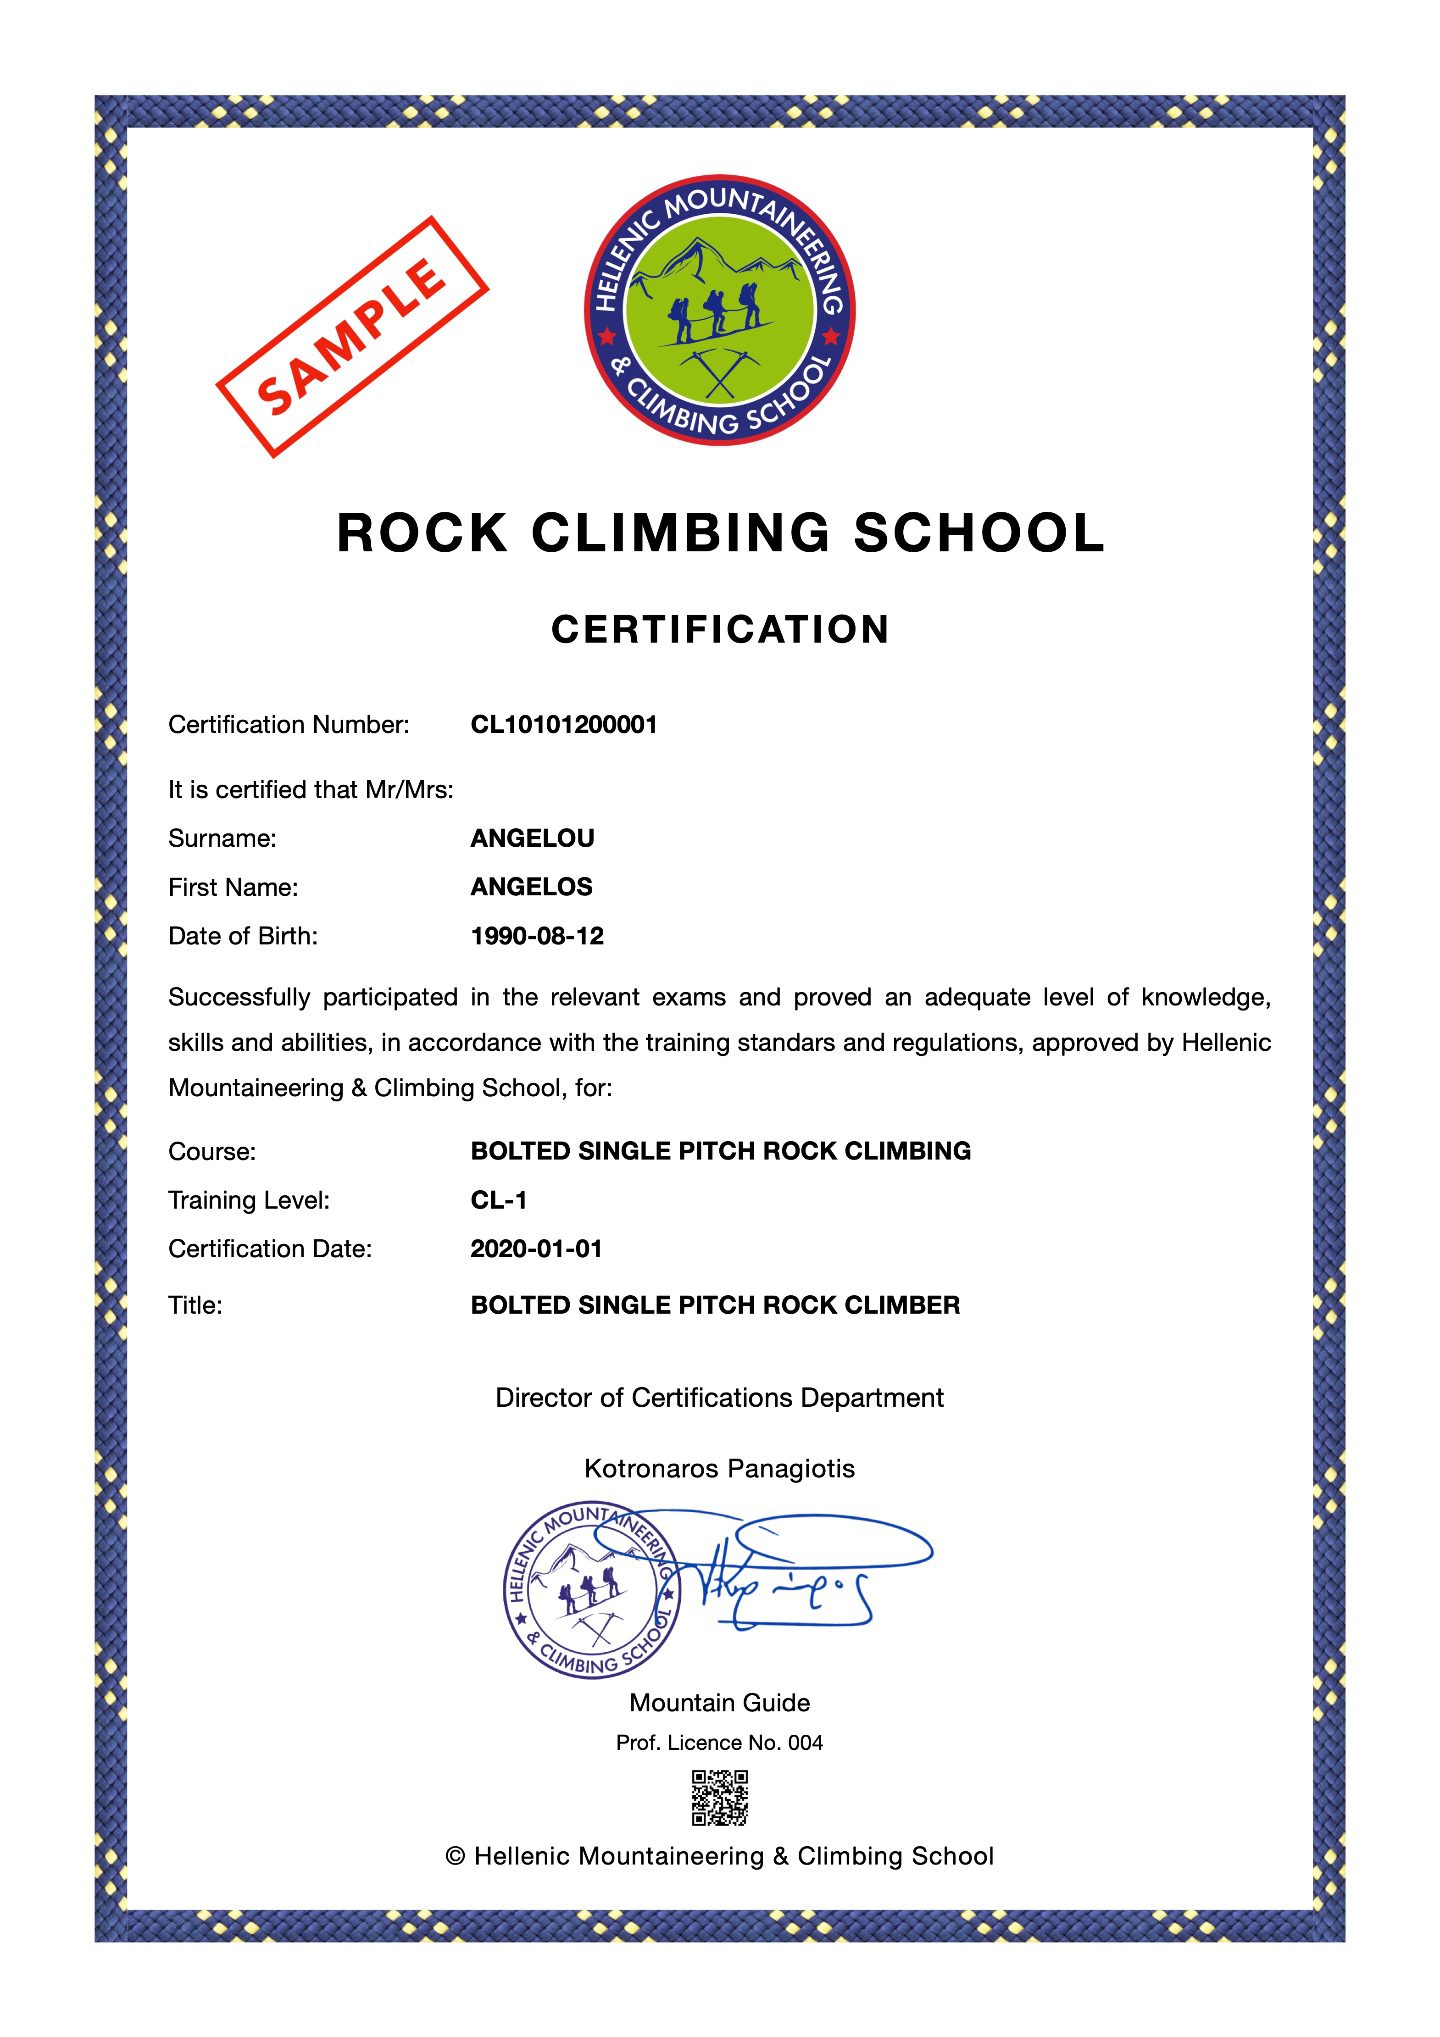 Rock Climbing Training Certification HMCS CL1